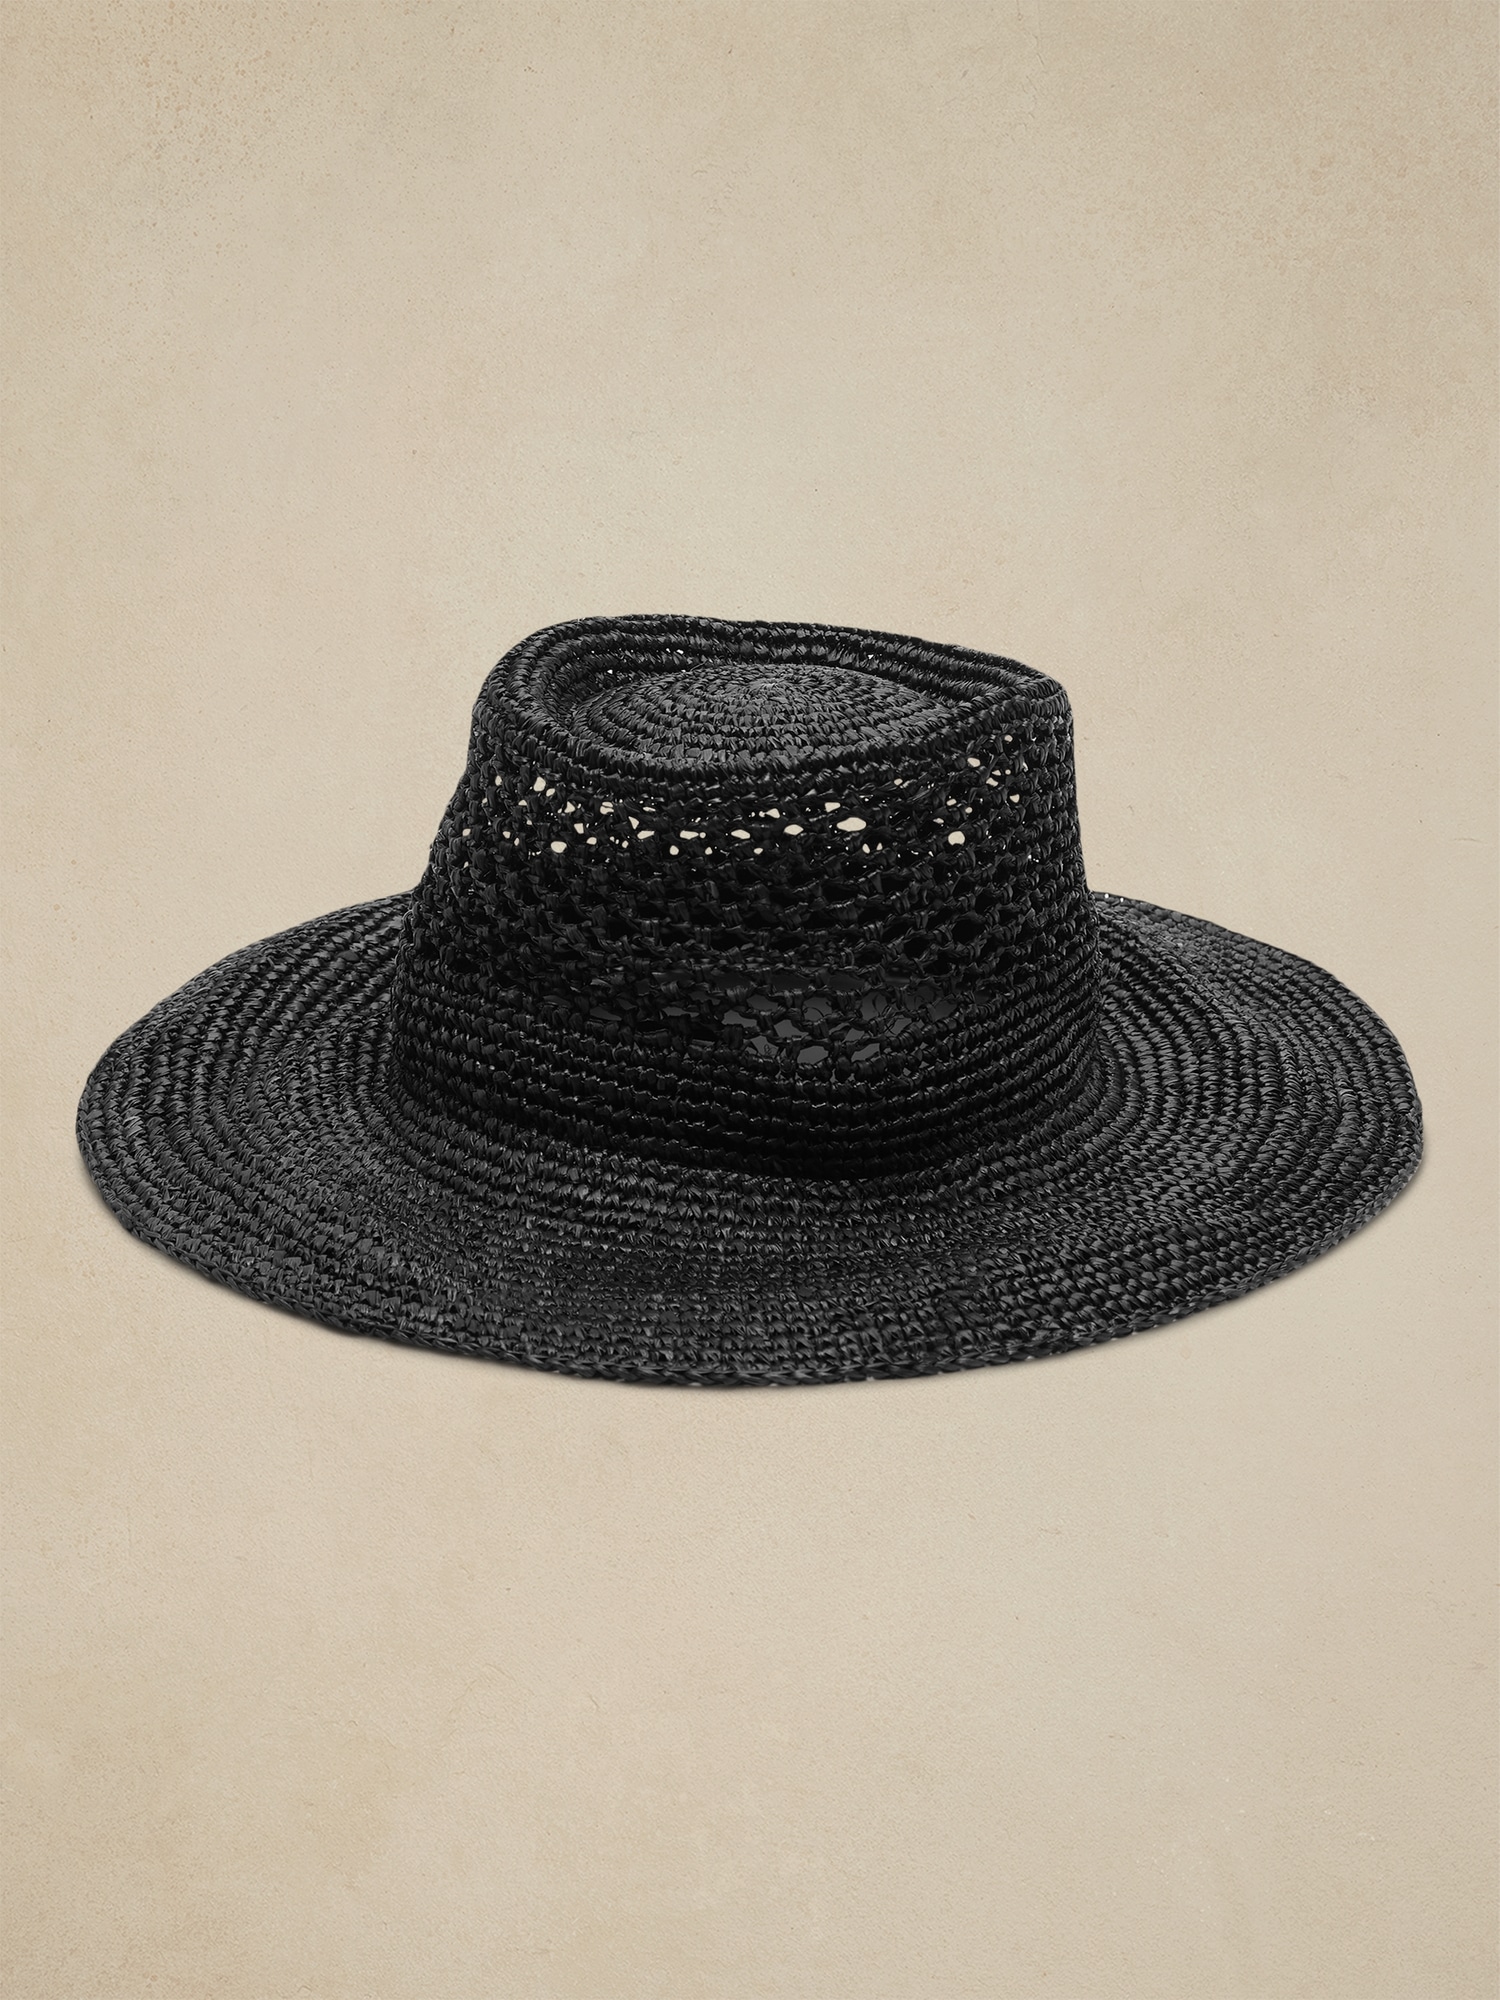 Banana Republic Crochet Straw Hat (Black)